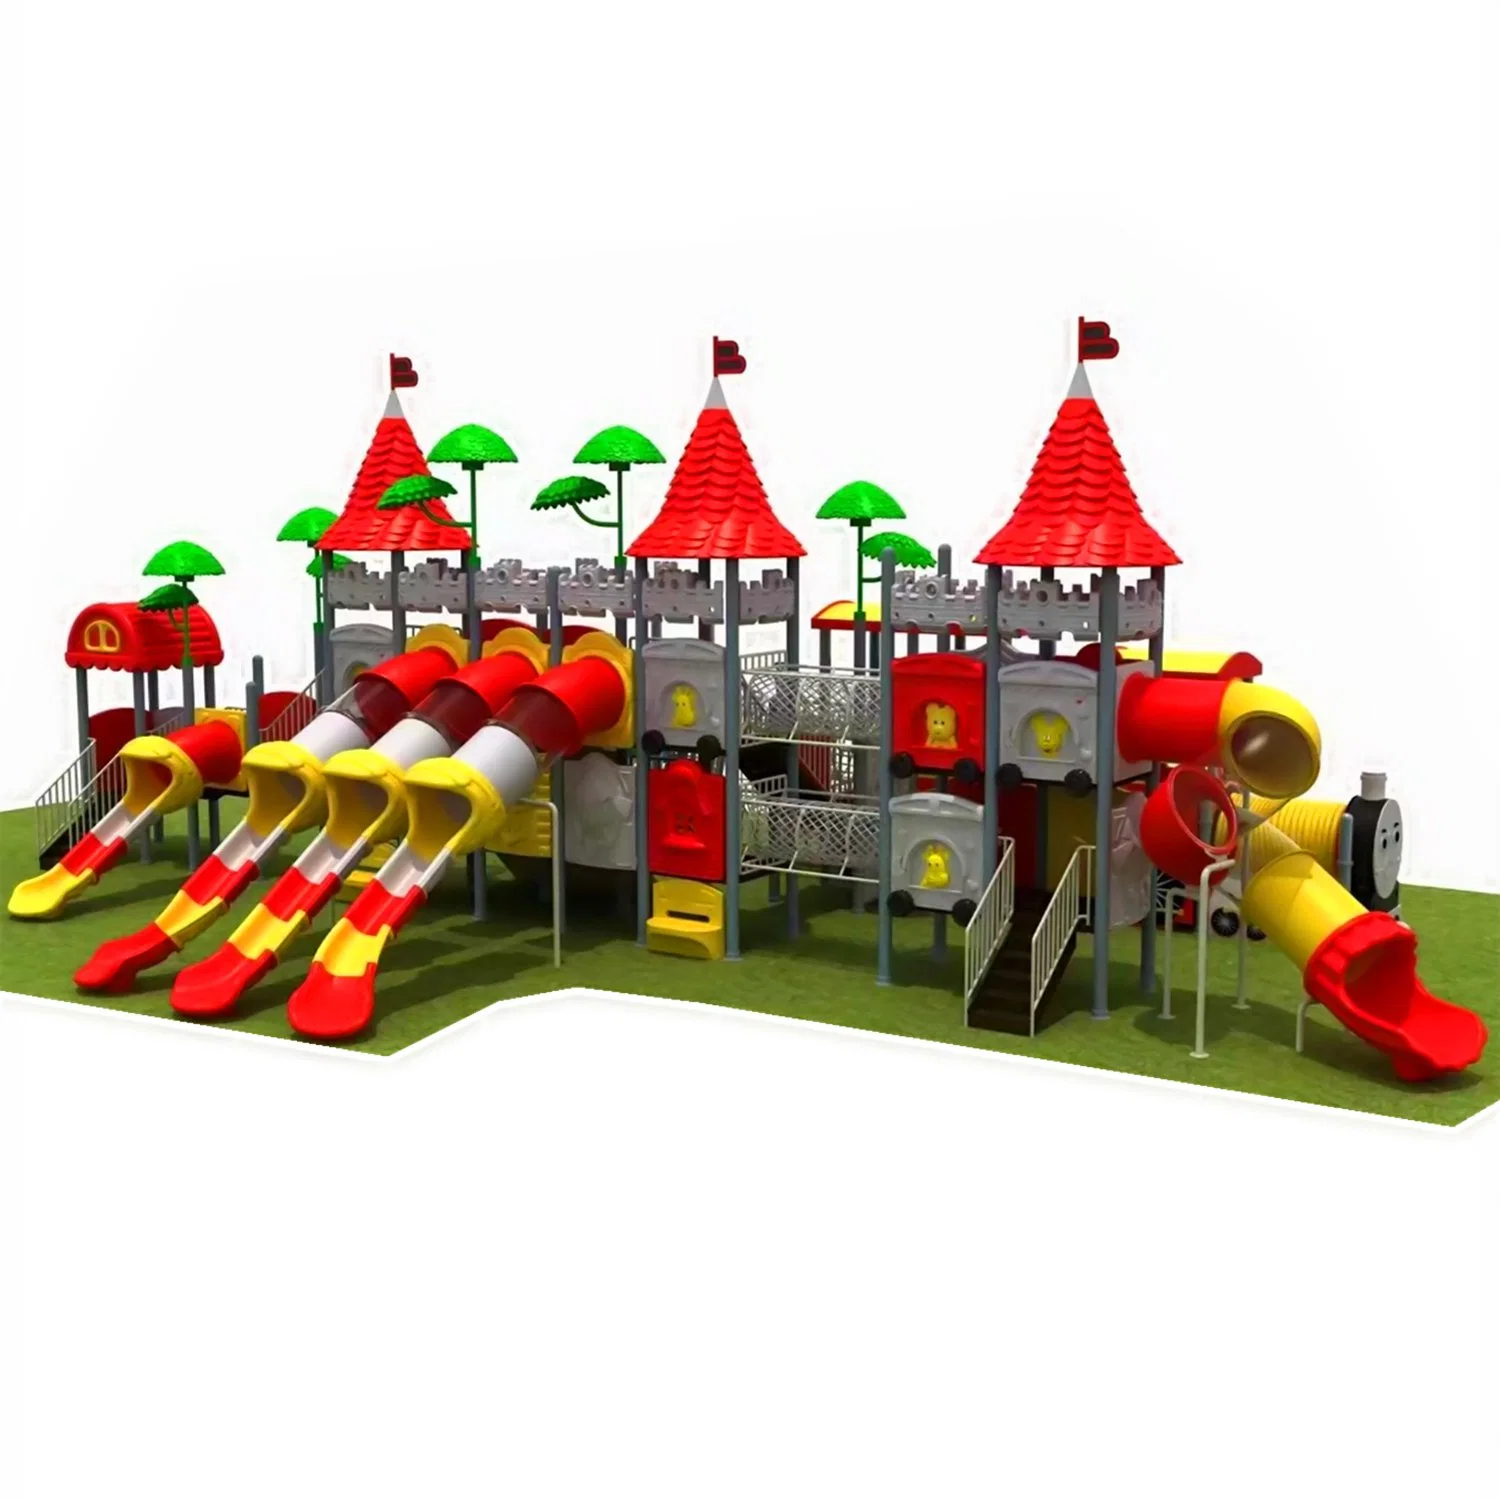 School Outdoor Children's Amusement Park Plastic Slide Playground Equipment Set